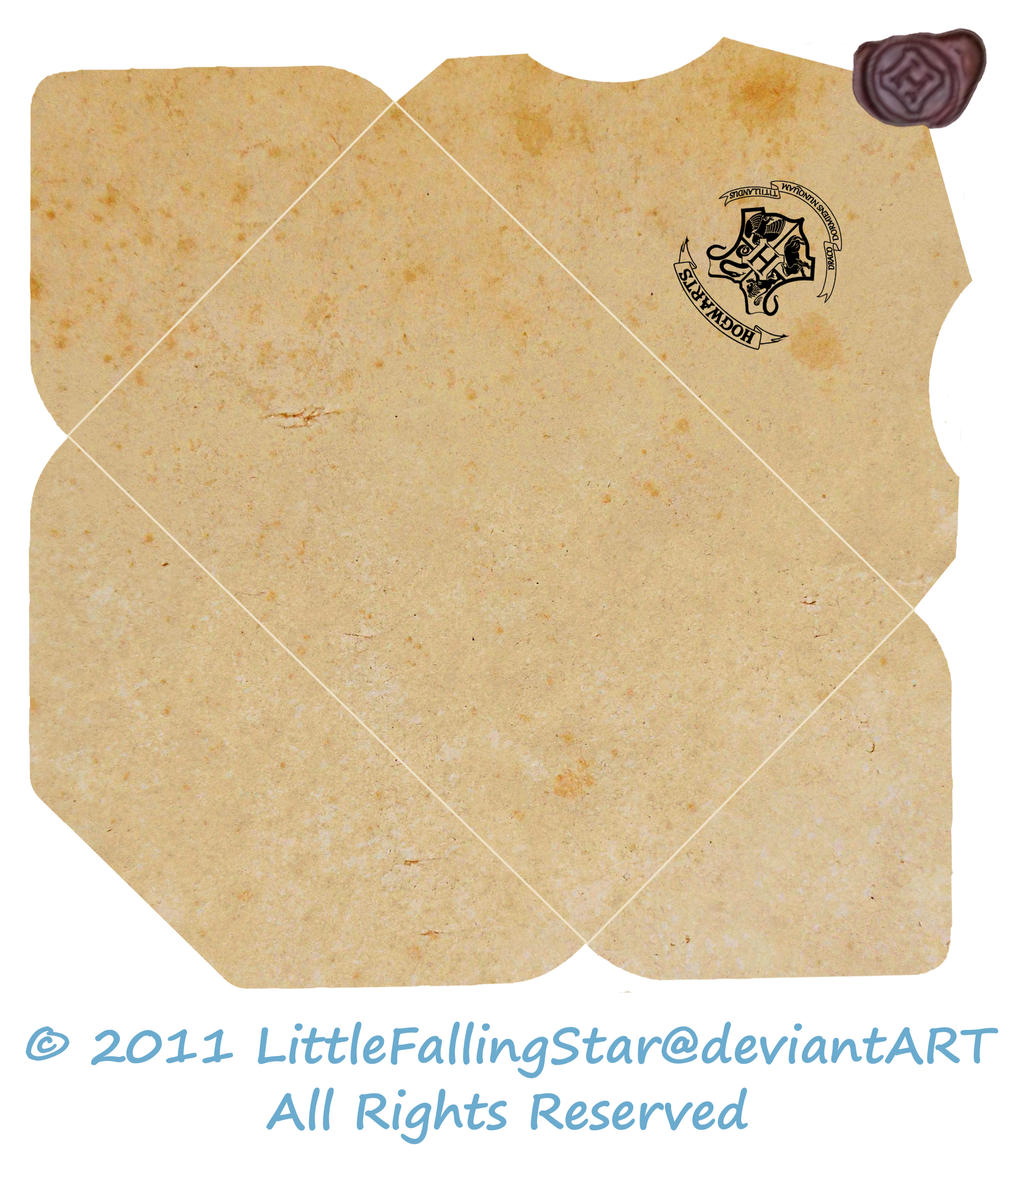 Hogwarts Envelope by LittleFallingStar on DeviantArt